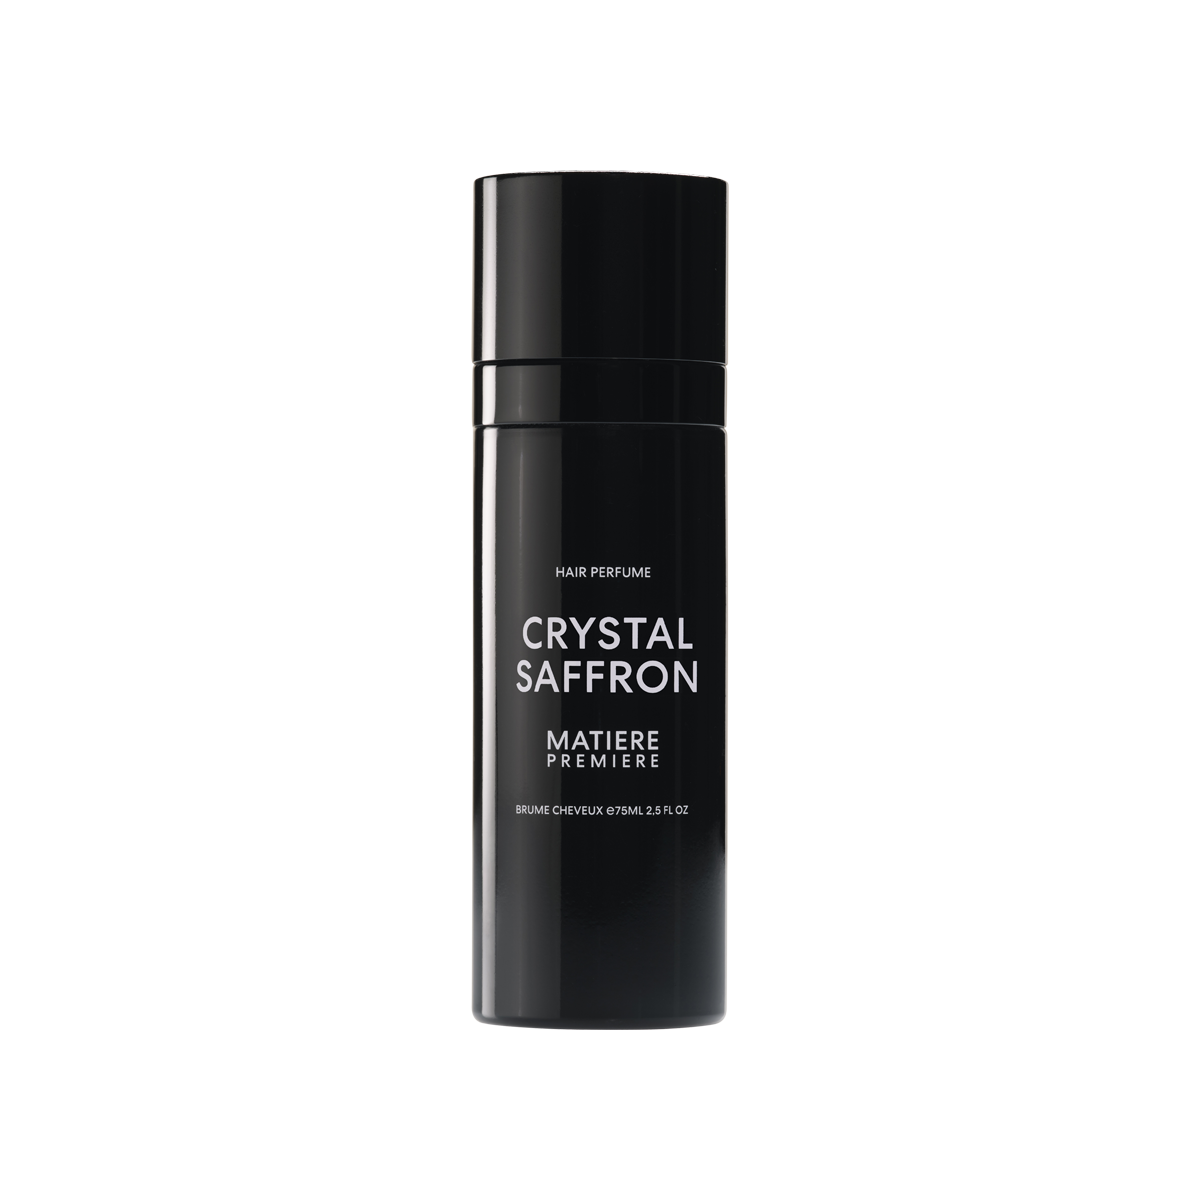 Matiere Premiere - Hair Perfume Crystal Saffron